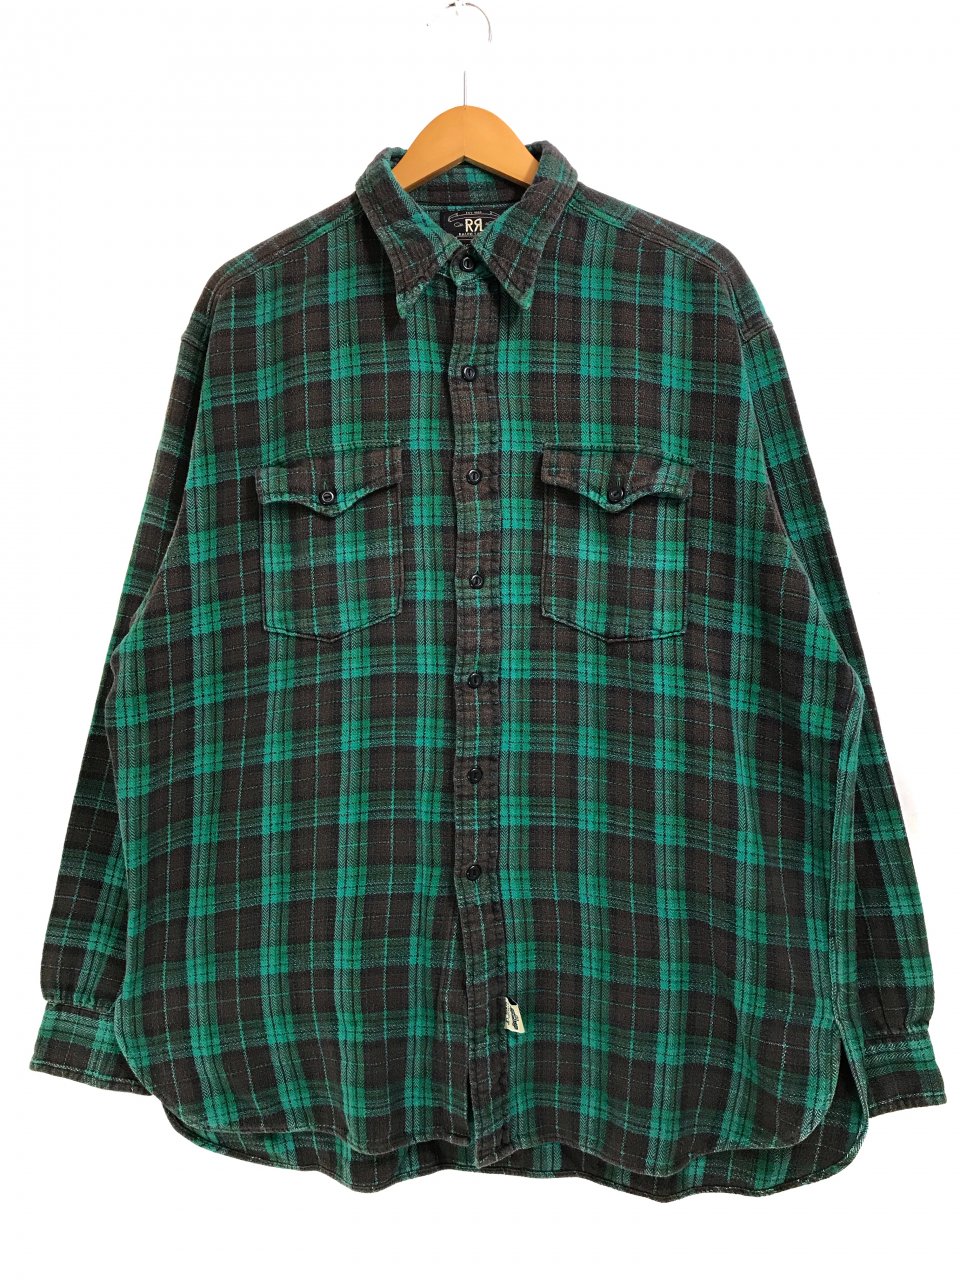 90s RRL Check Flannel L/S Shirt 緑茶 L 初期 三つ星 ダブルアール ...